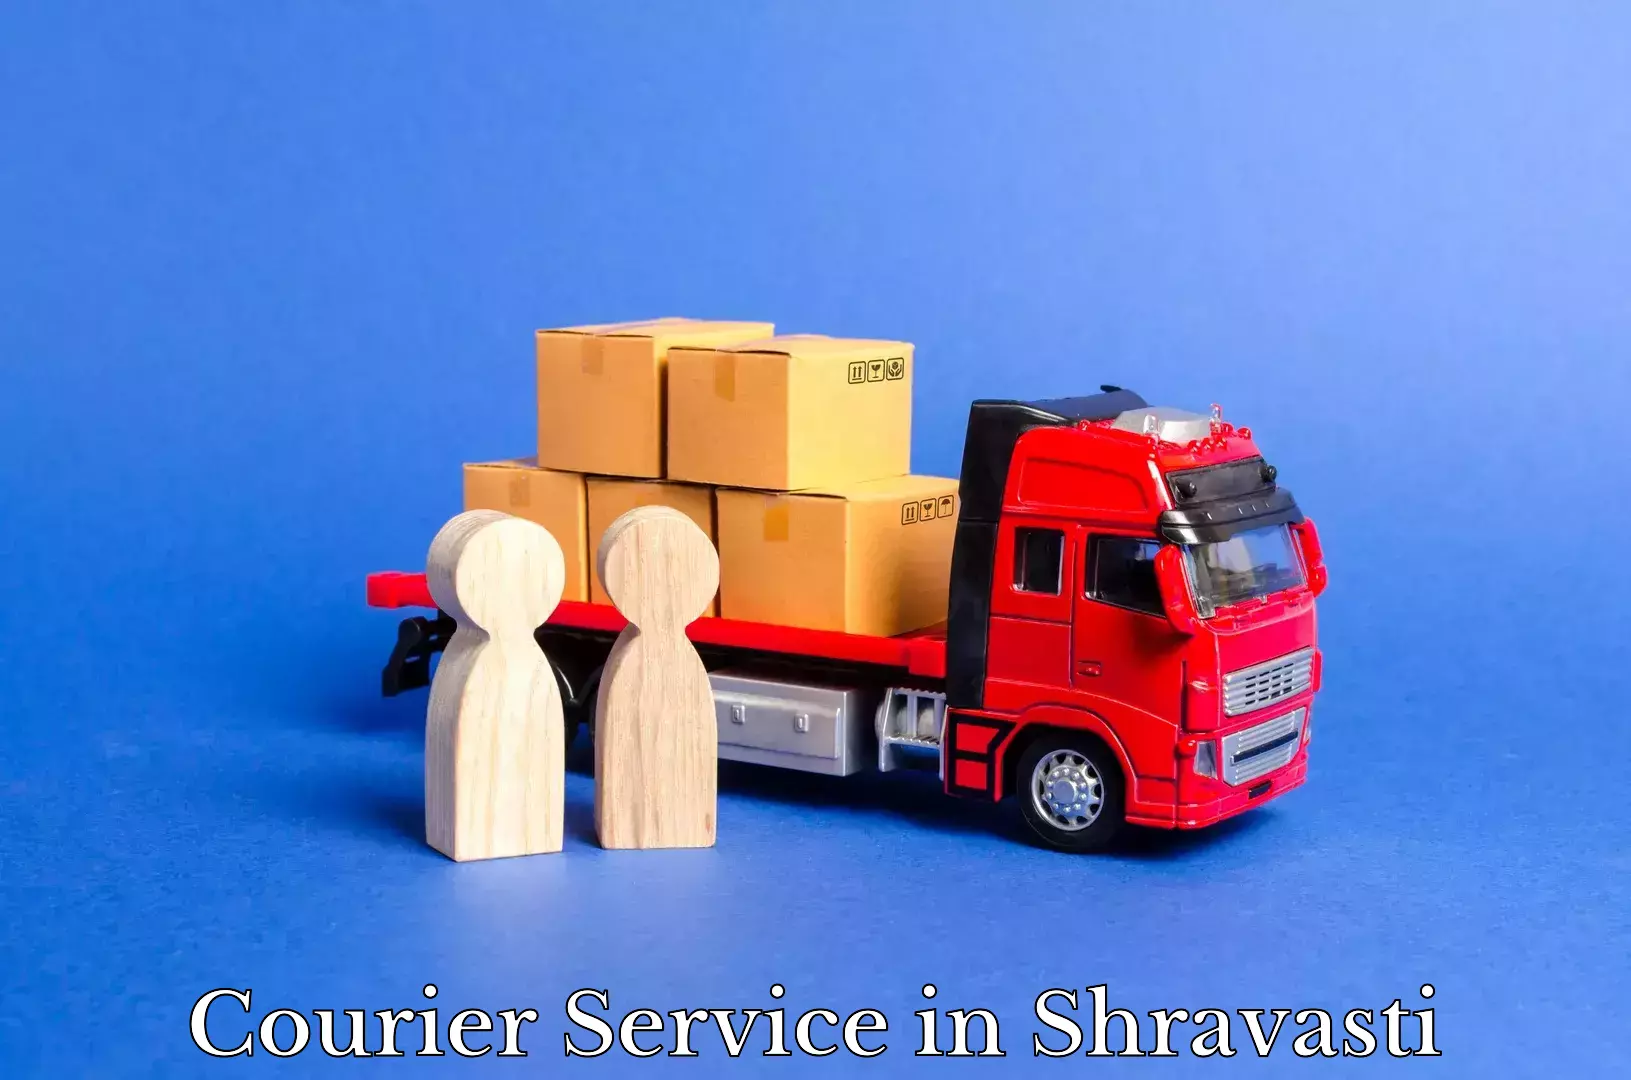 Streamlined delivery processes in Shravasti